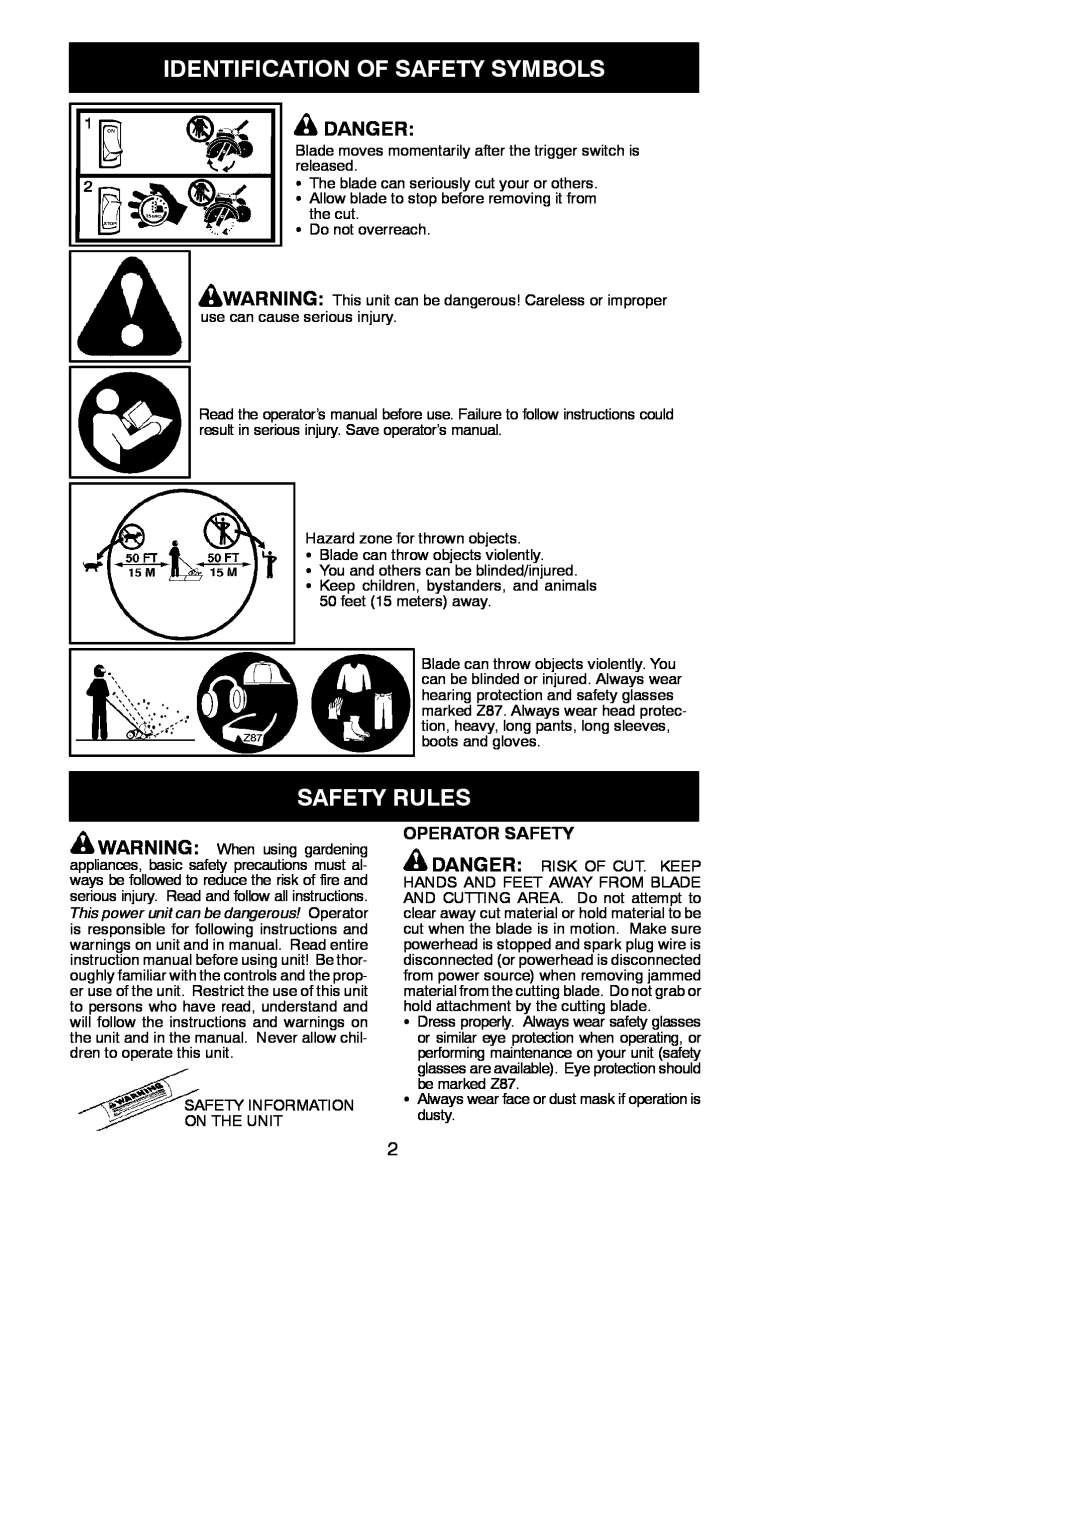 Poulan 952711825, 545167665 instruction manual Identification Of Safety Symbols, Safety Rules, Danger, Operator Safety 